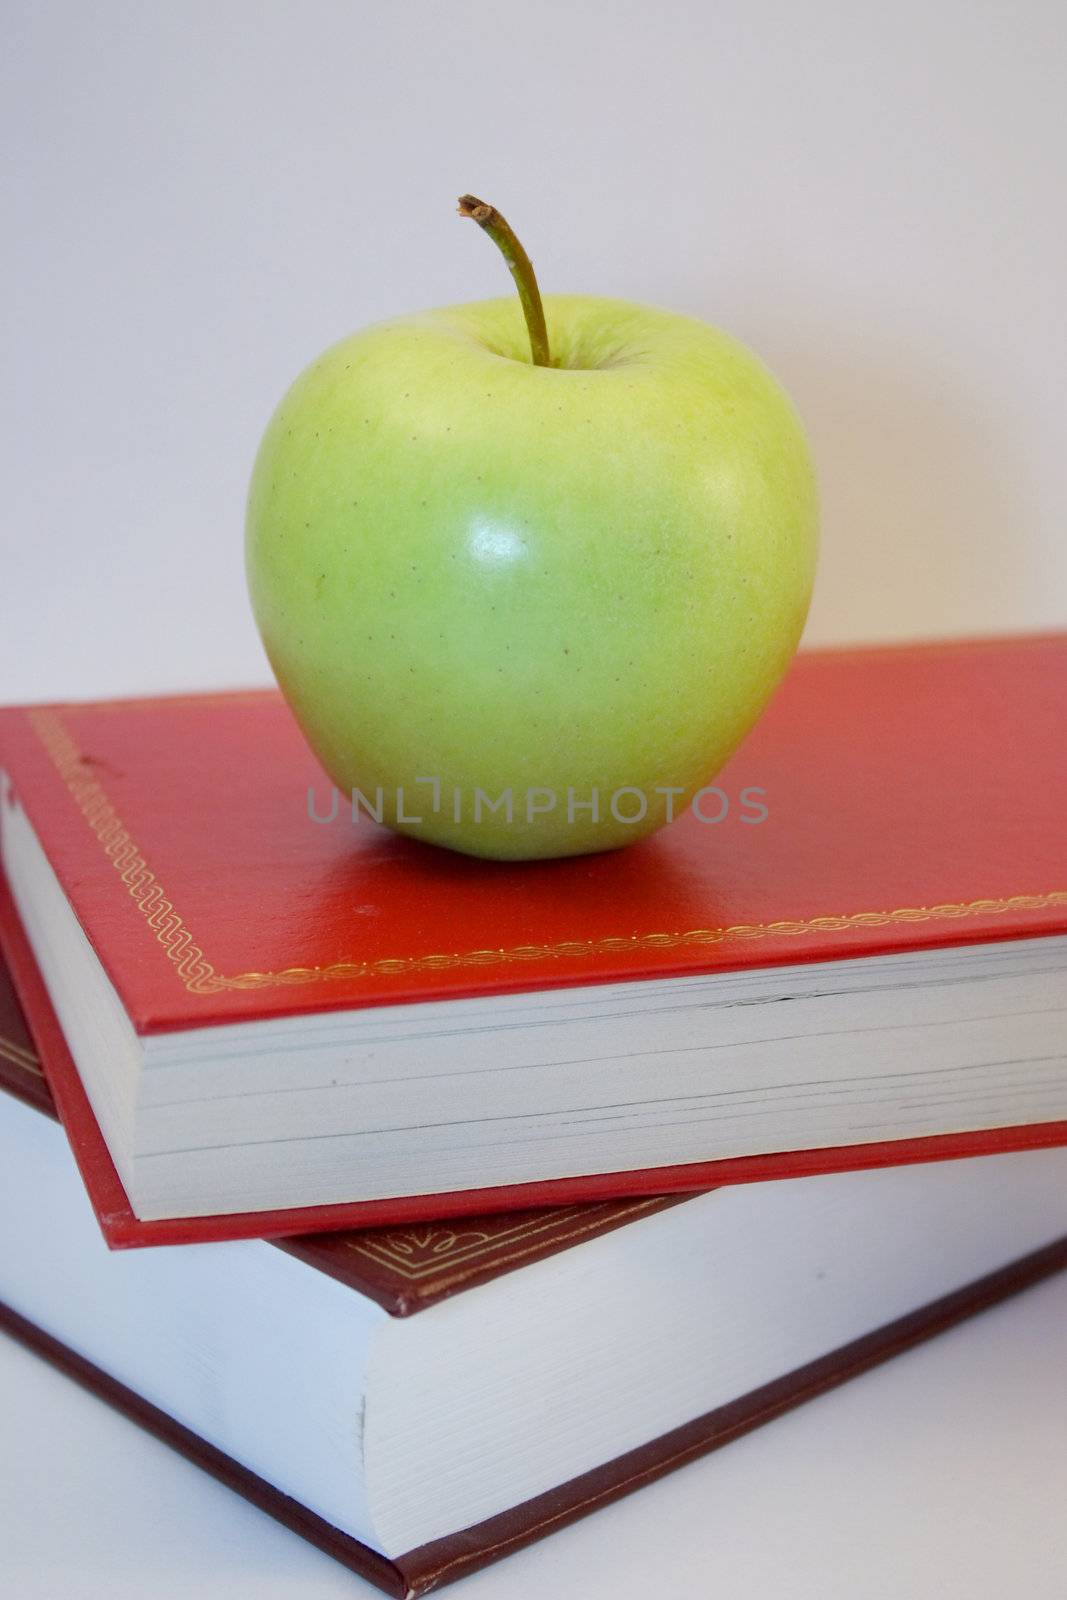 apple on two books closeup